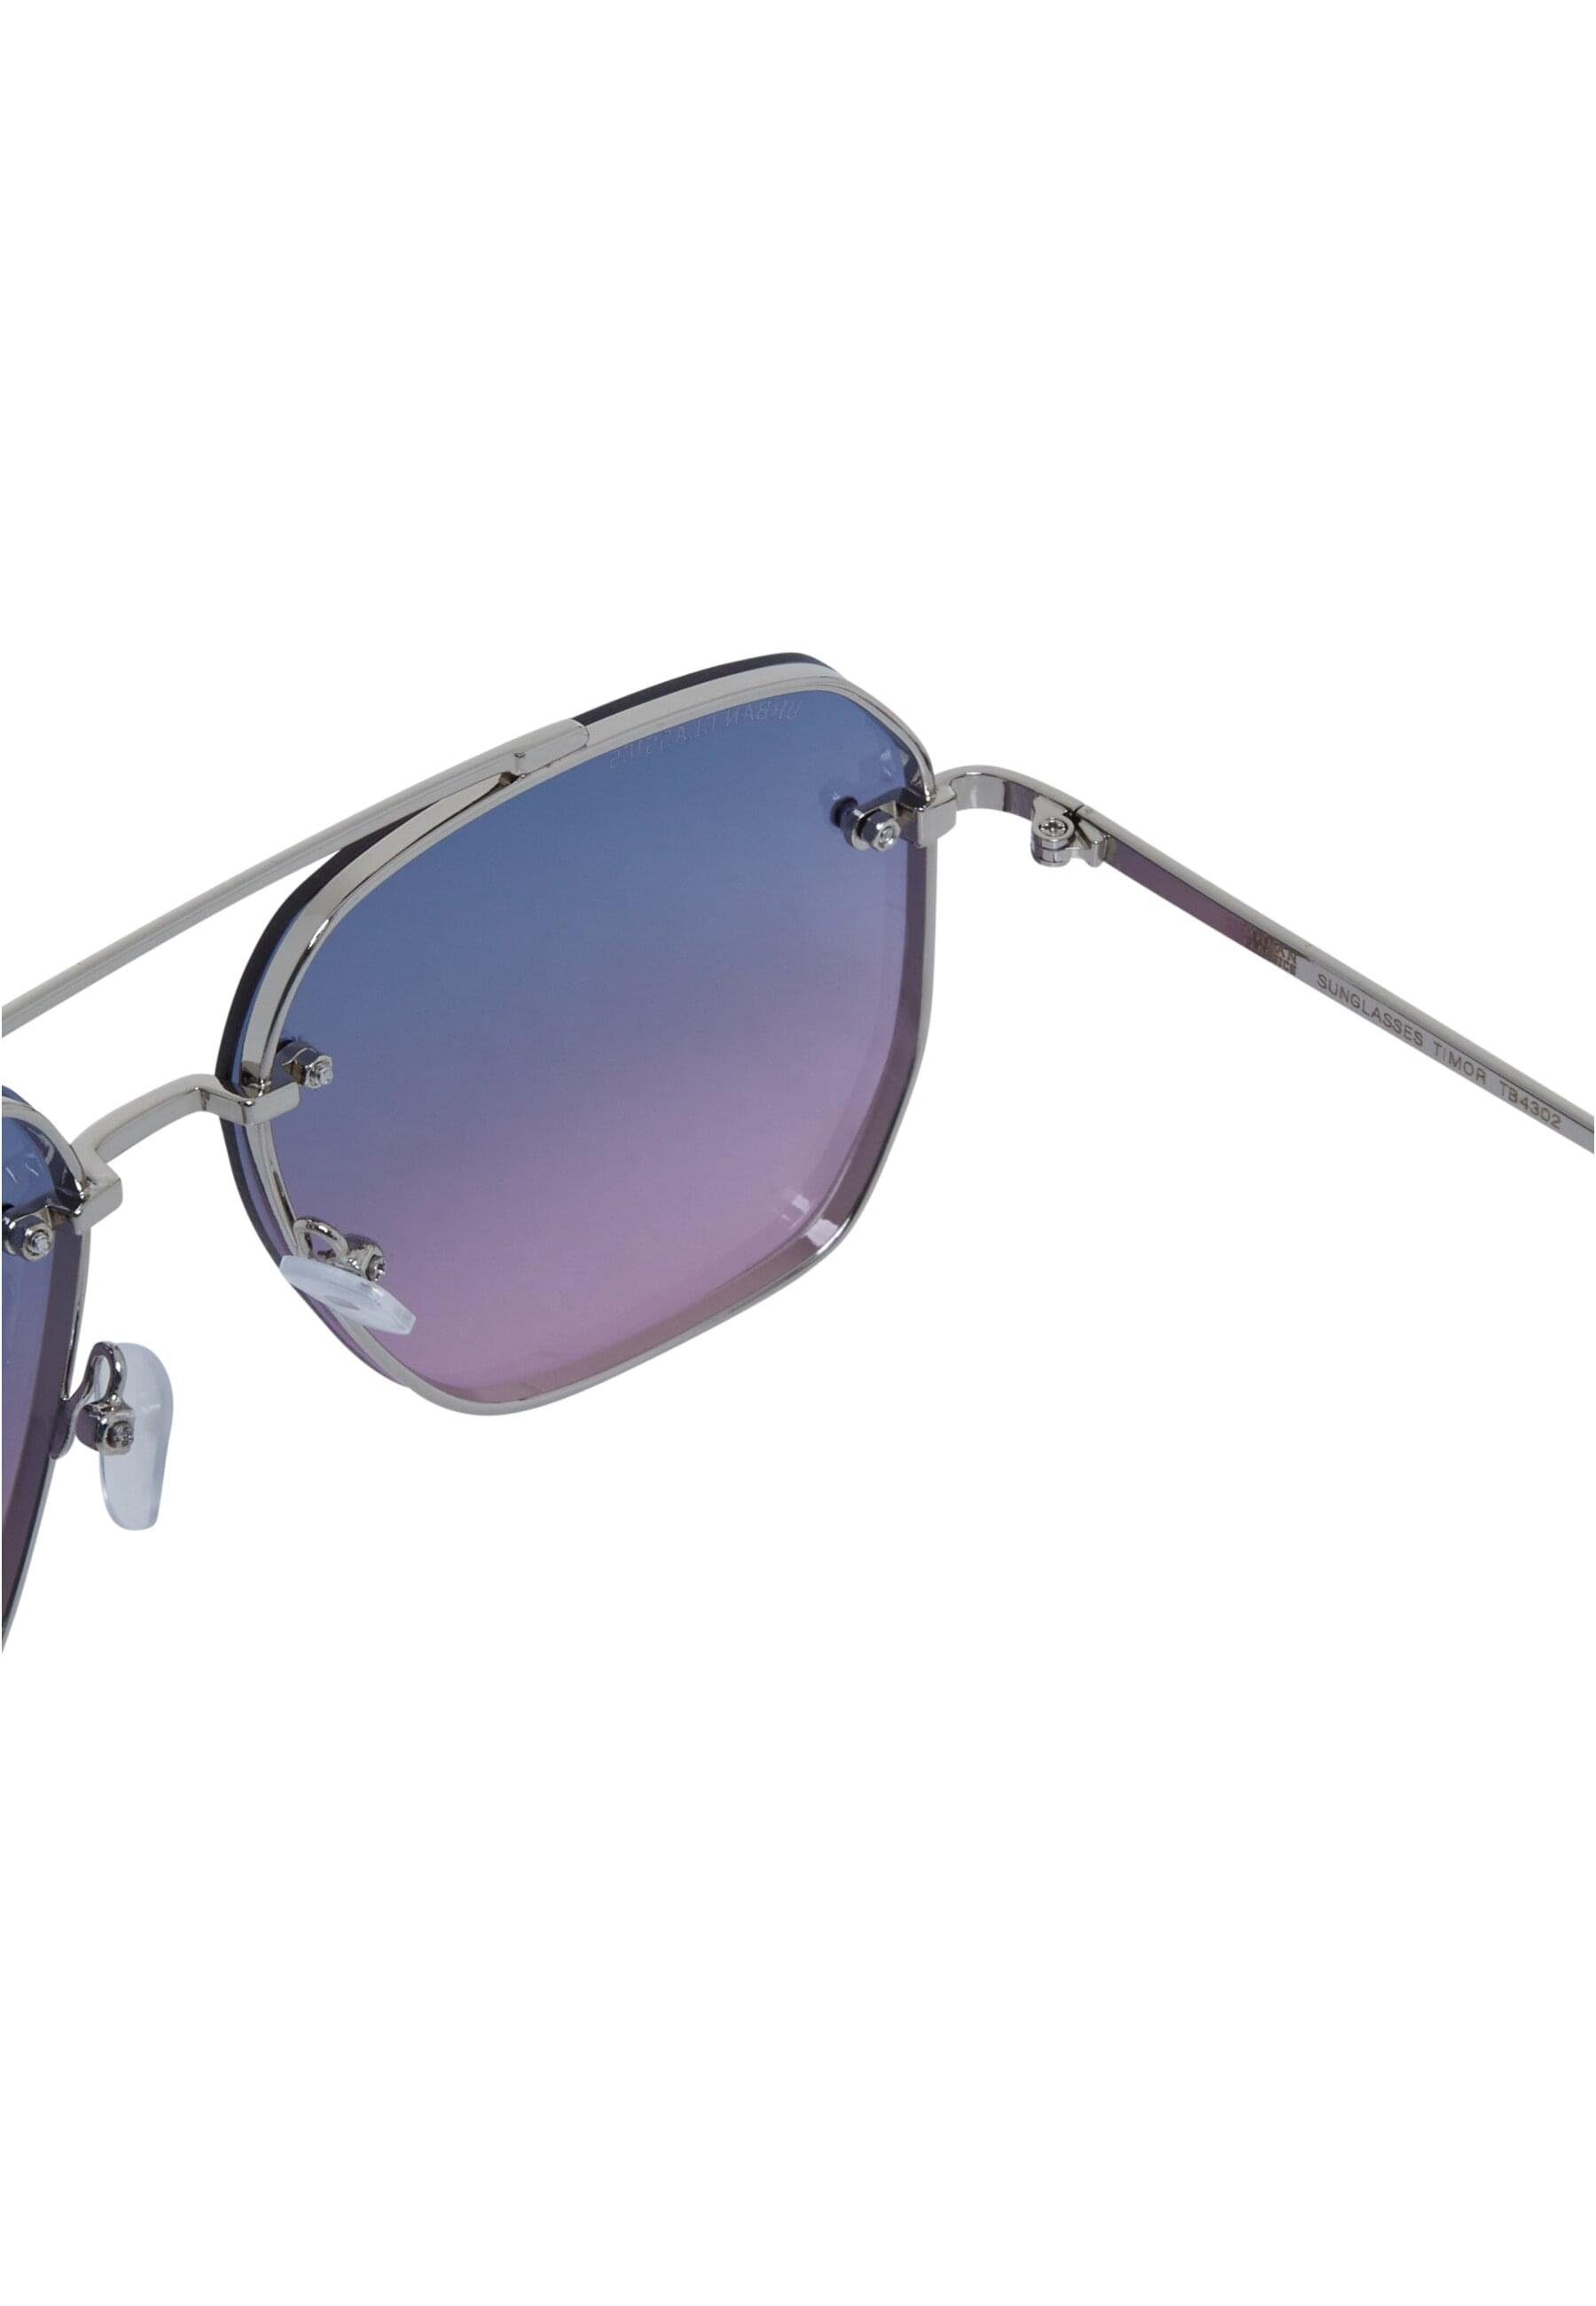 Sunglasses Unisex CLASSICS black/silver Timor Sonnenbrille URBAN